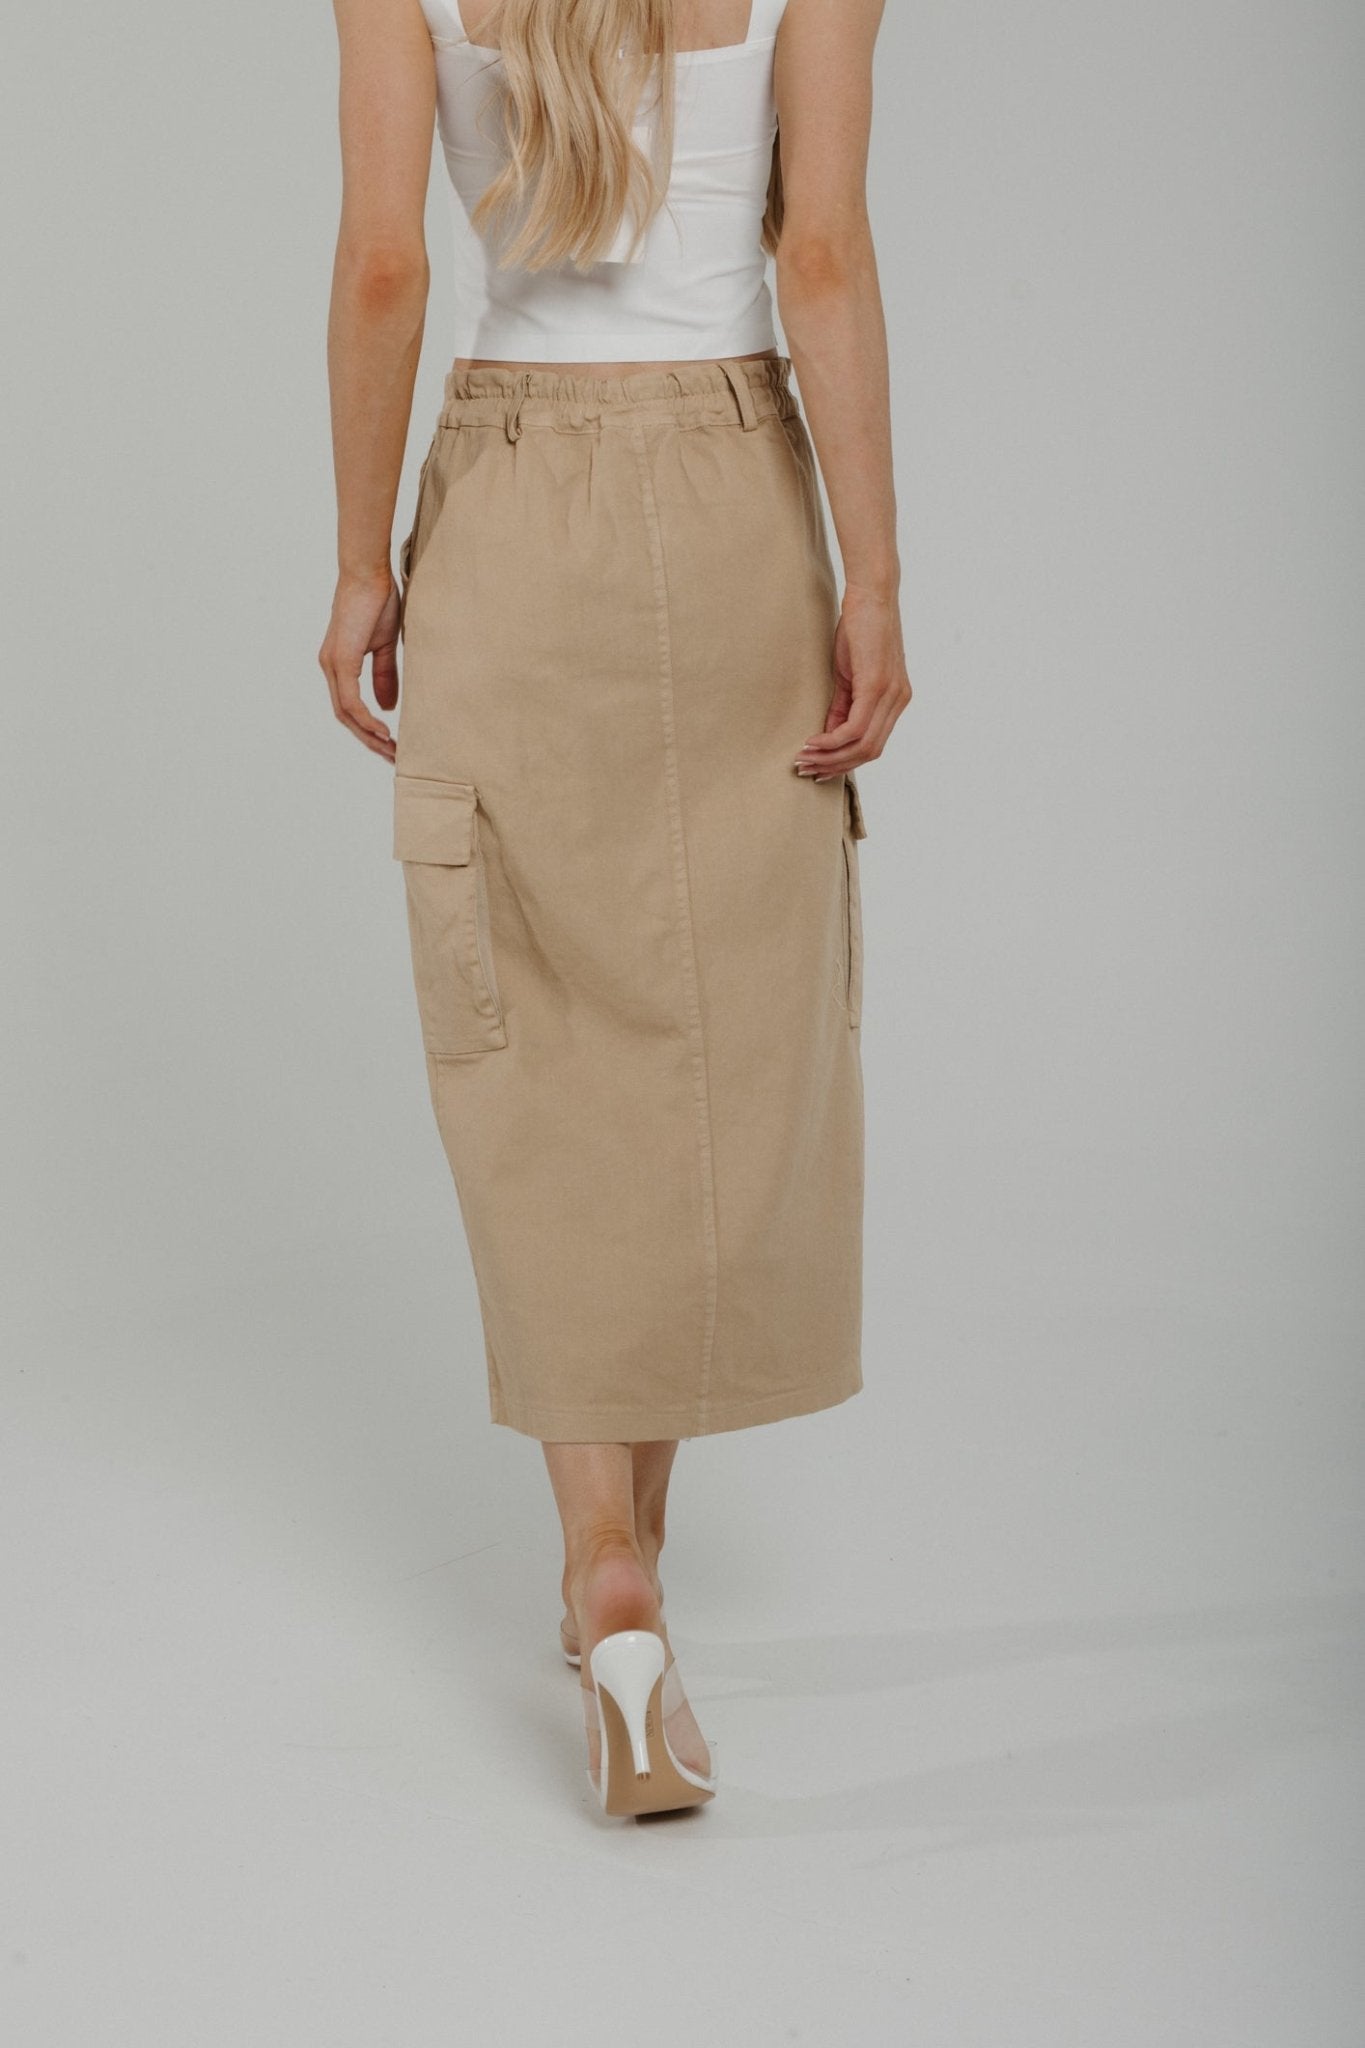 Wynn Denim Skirt In Beige - The Walk in Wardrobe